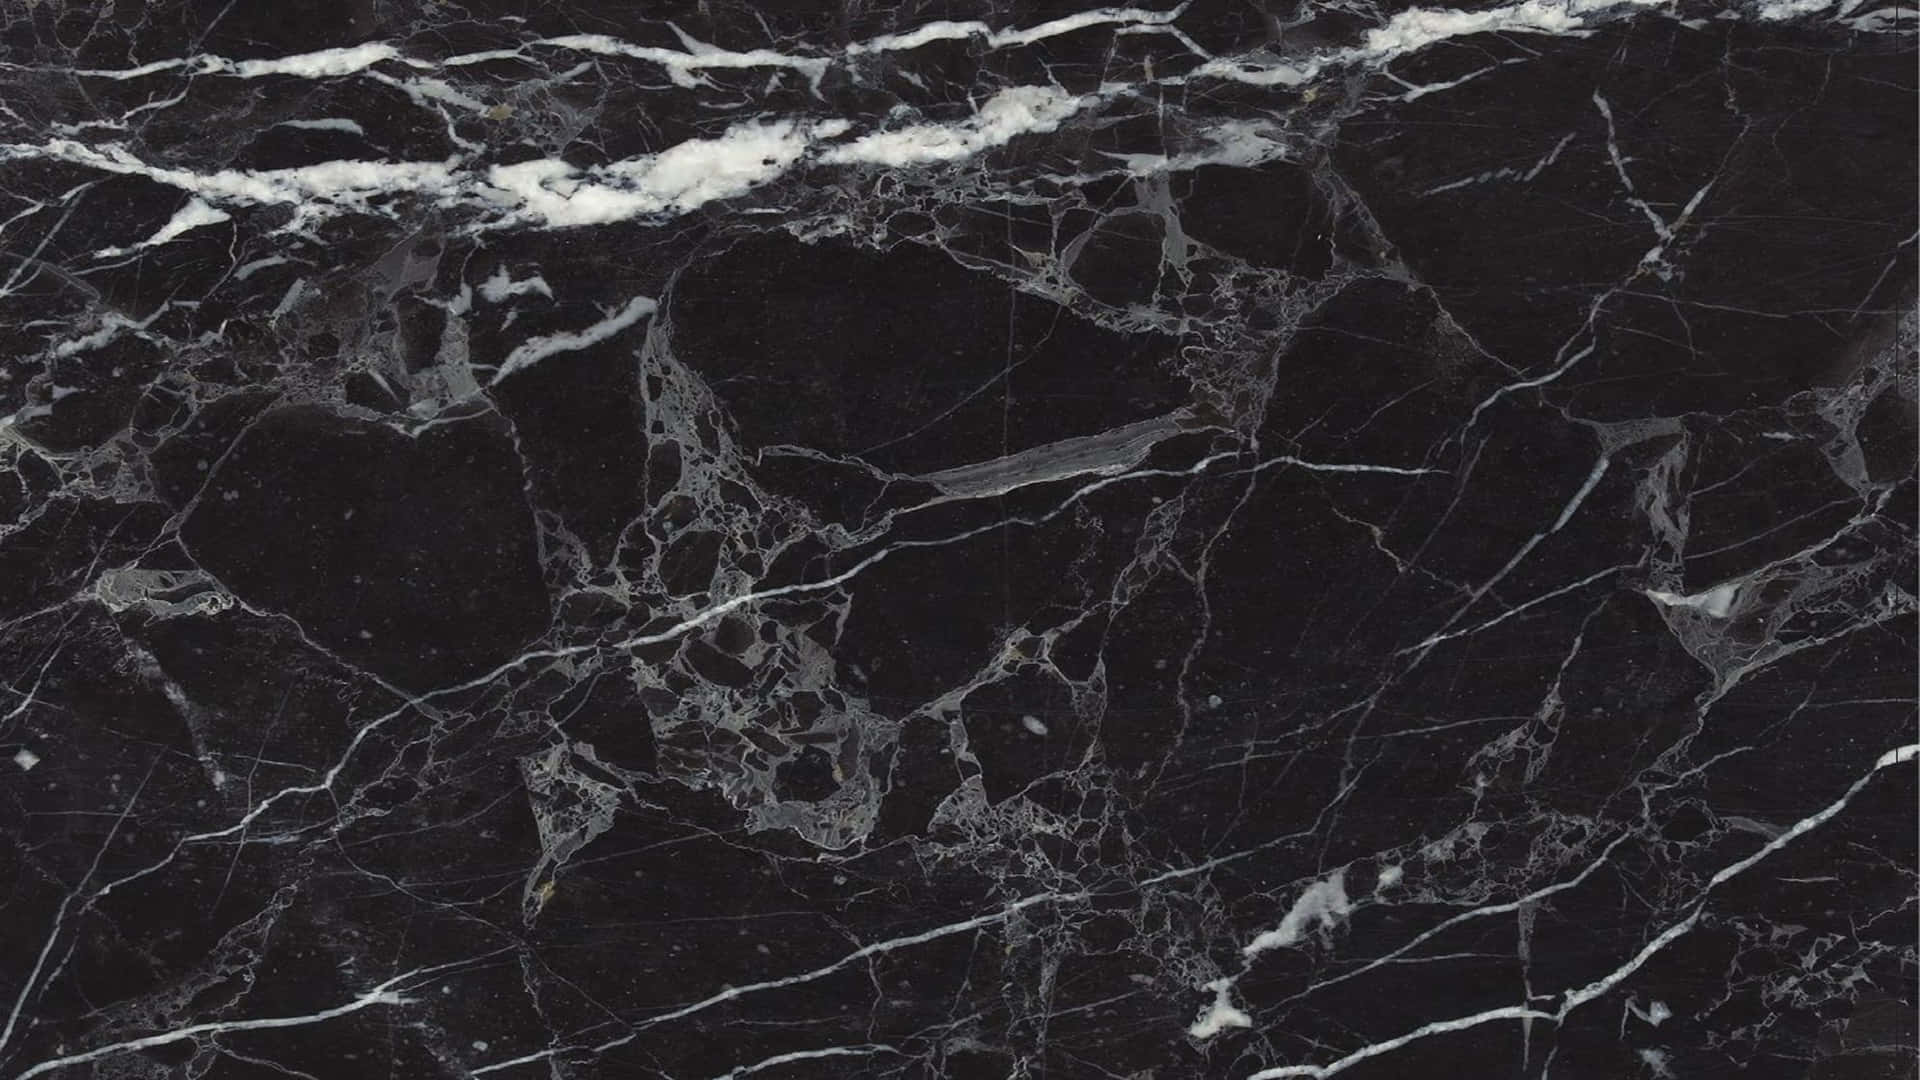 Cobweb-Textured Black And White Marble Wallpaper